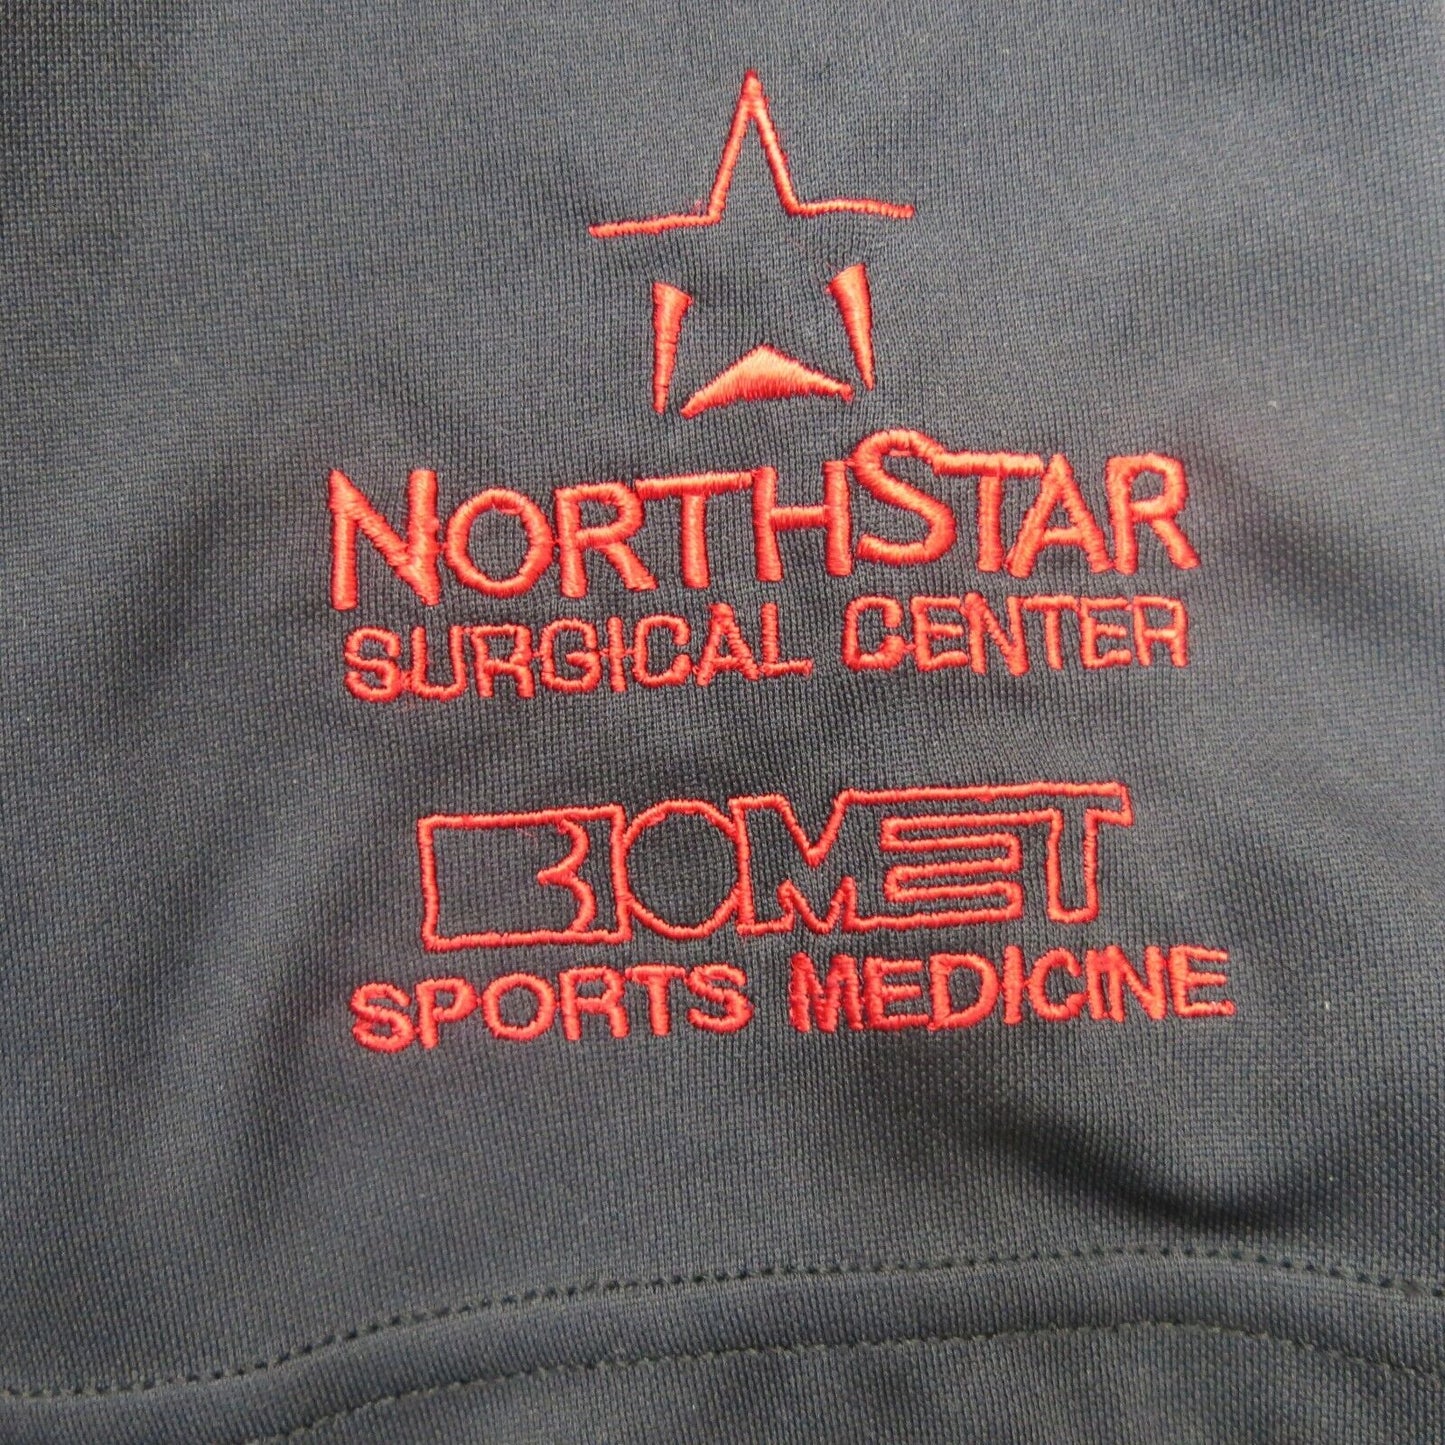 Under Armour Mens T Shirt Texas Tech Sports Medicine Short Sleeve Black Size LG